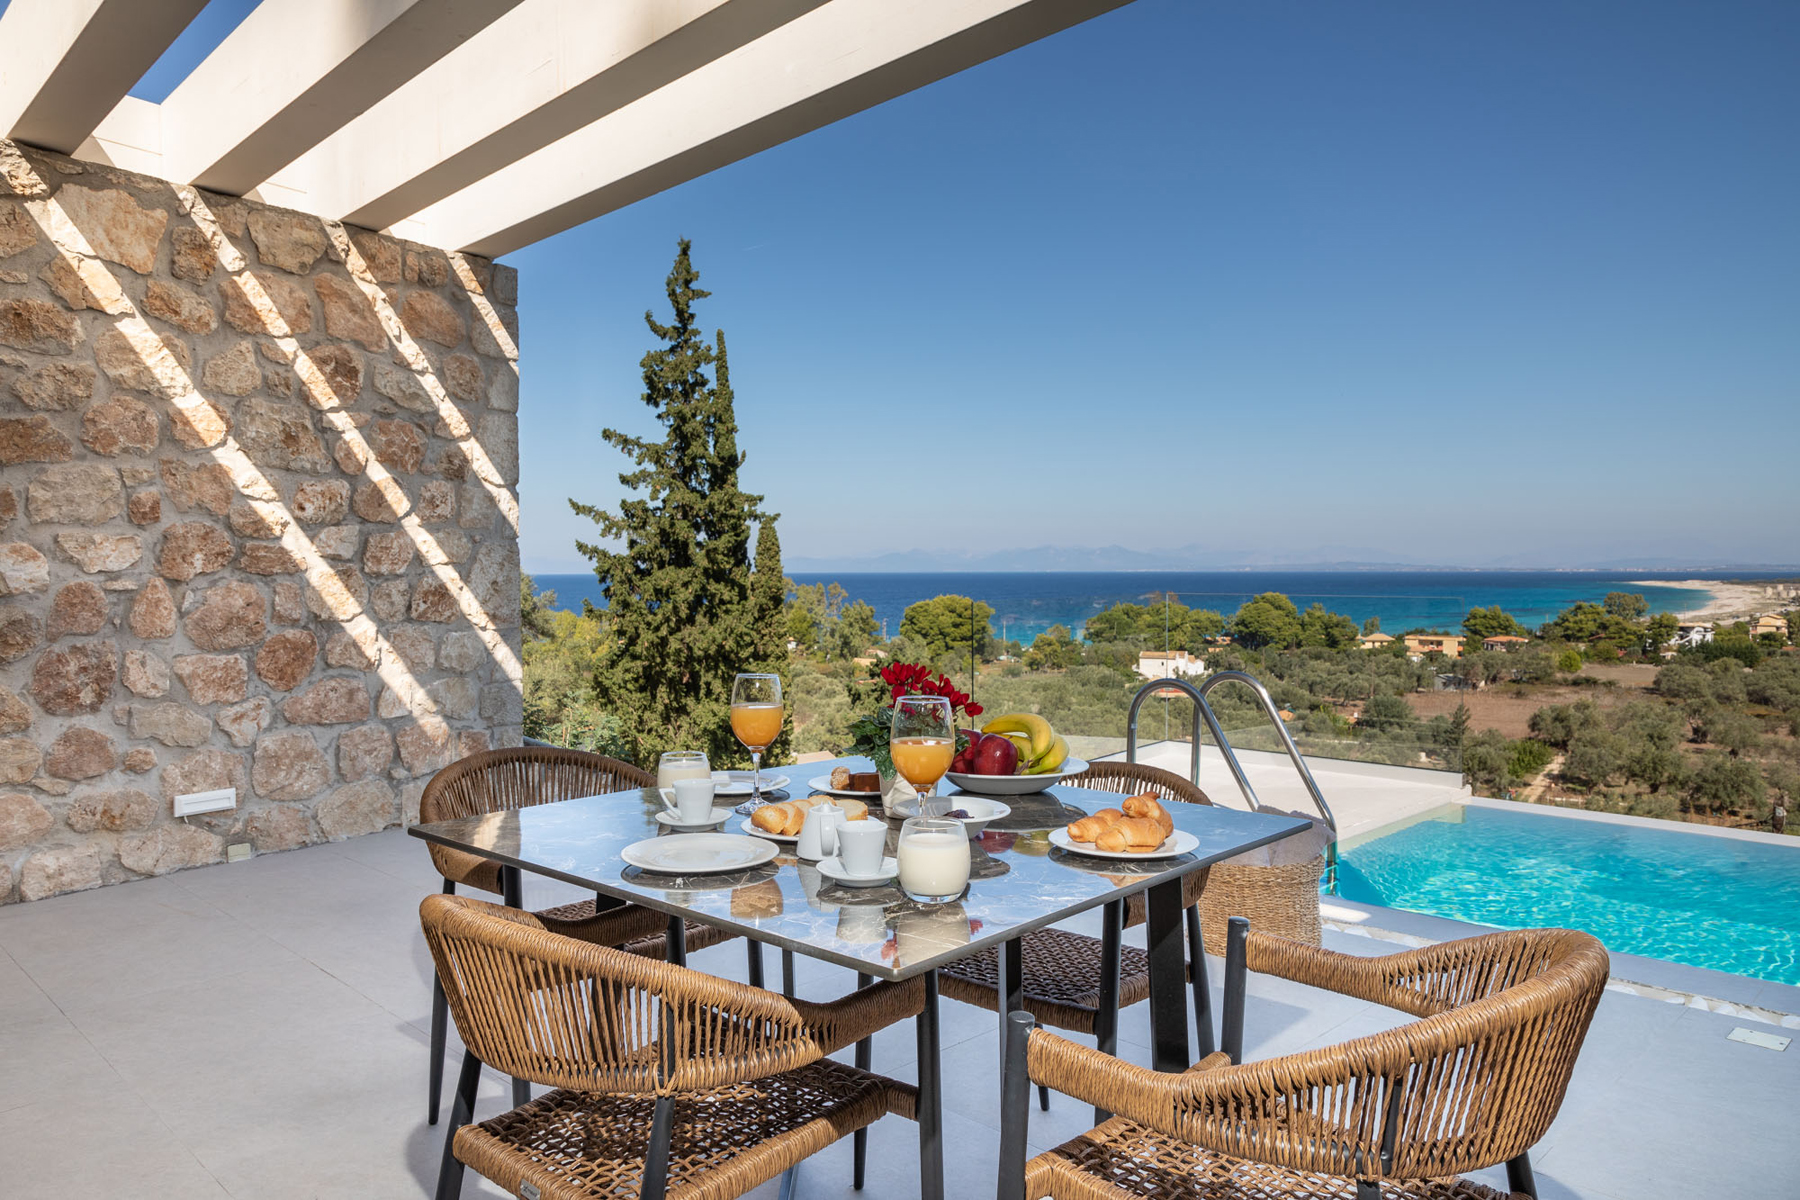 z luxury villa delta lefkada greece swimming pool table breakfast sea view trees